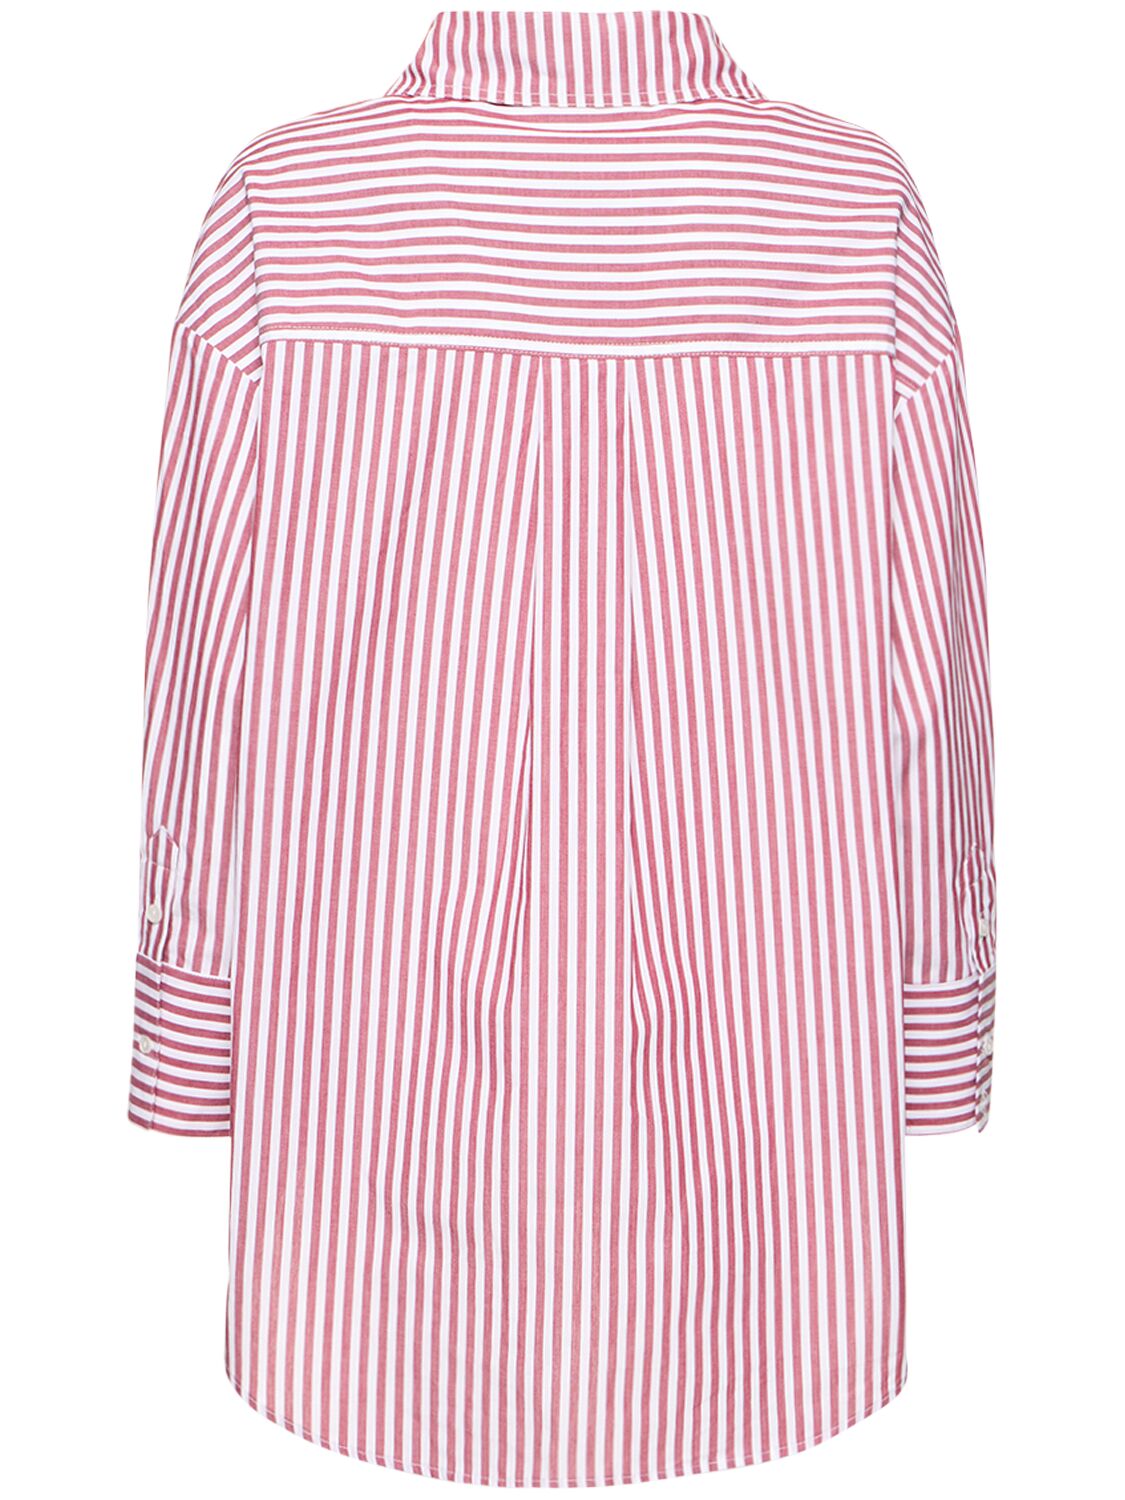 ANINE BING Mika Shirt in Red & White Stripe